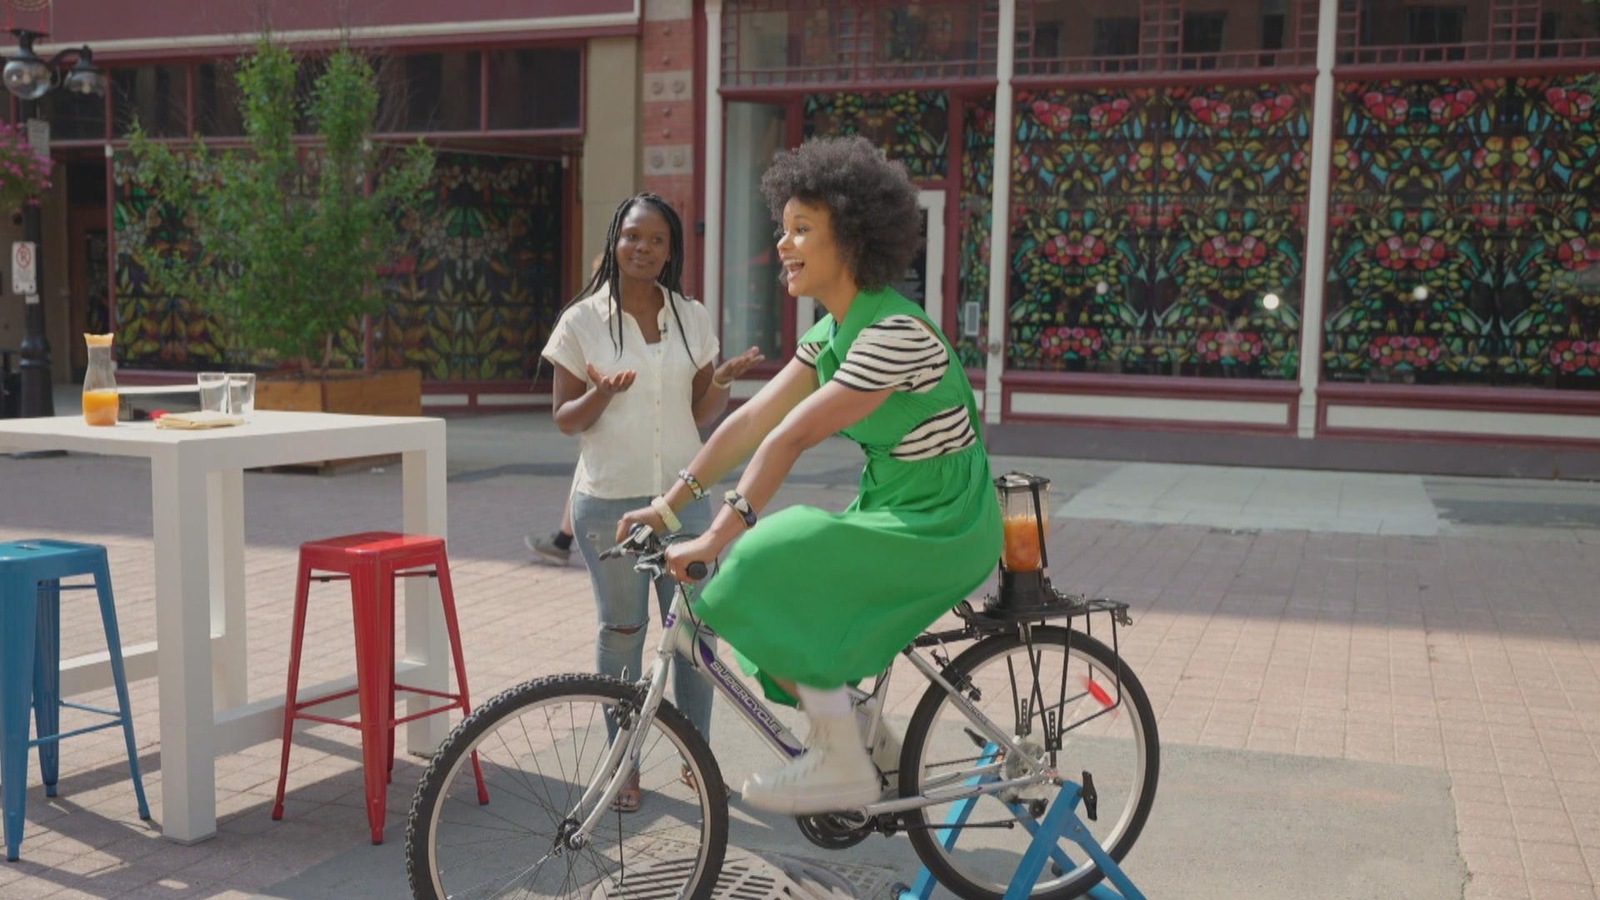 Marieme Ndiaye pedalea en bicicleta con una batidora llena de batidos adjunta.